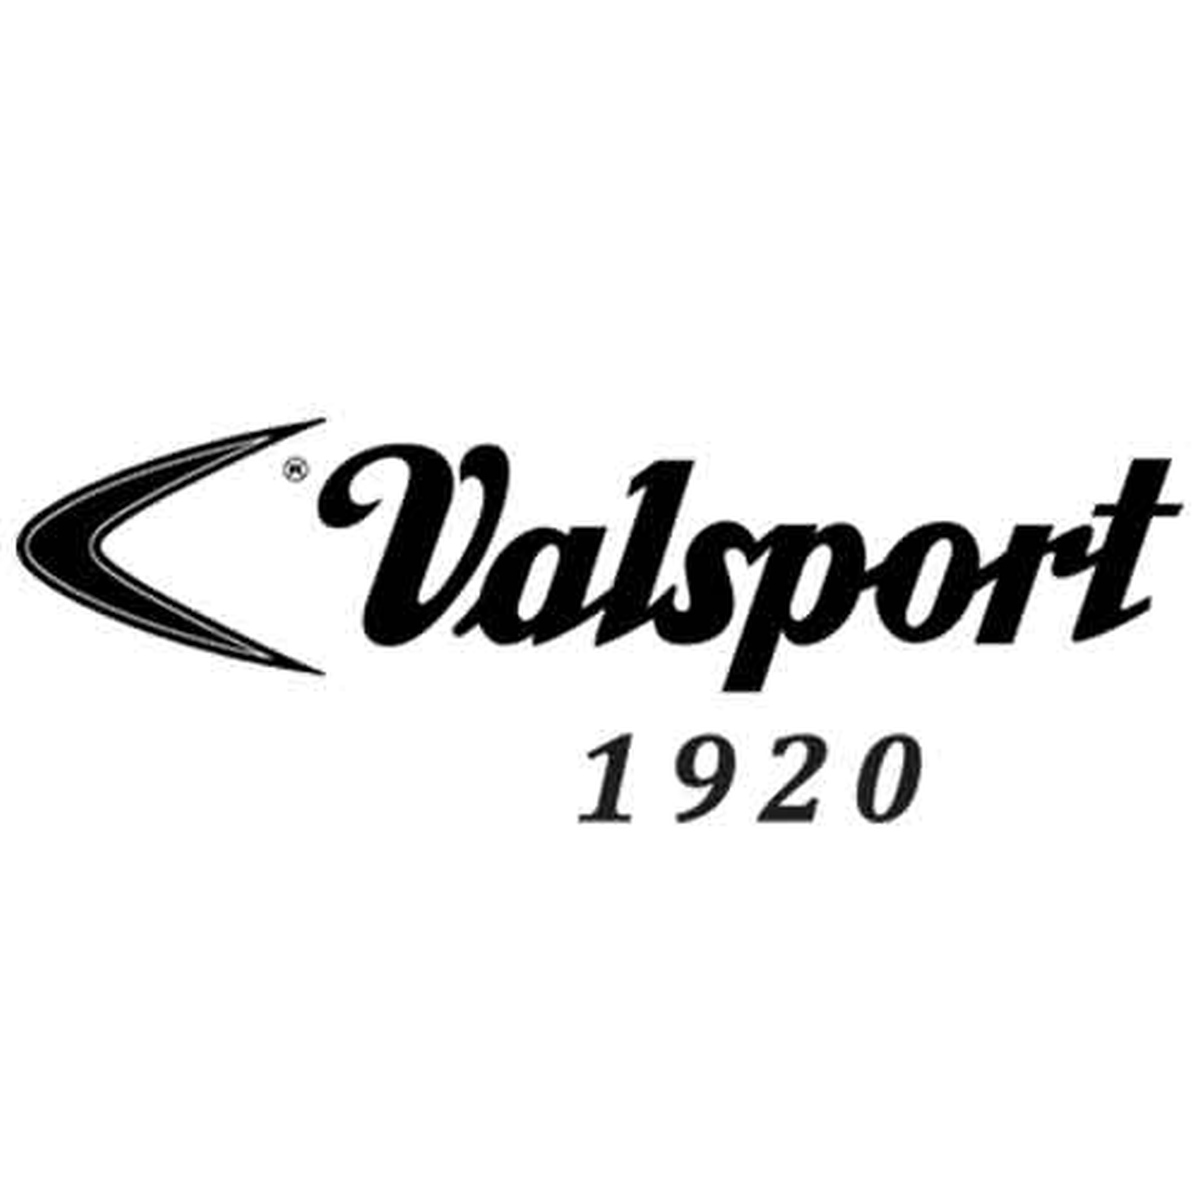 Valsport